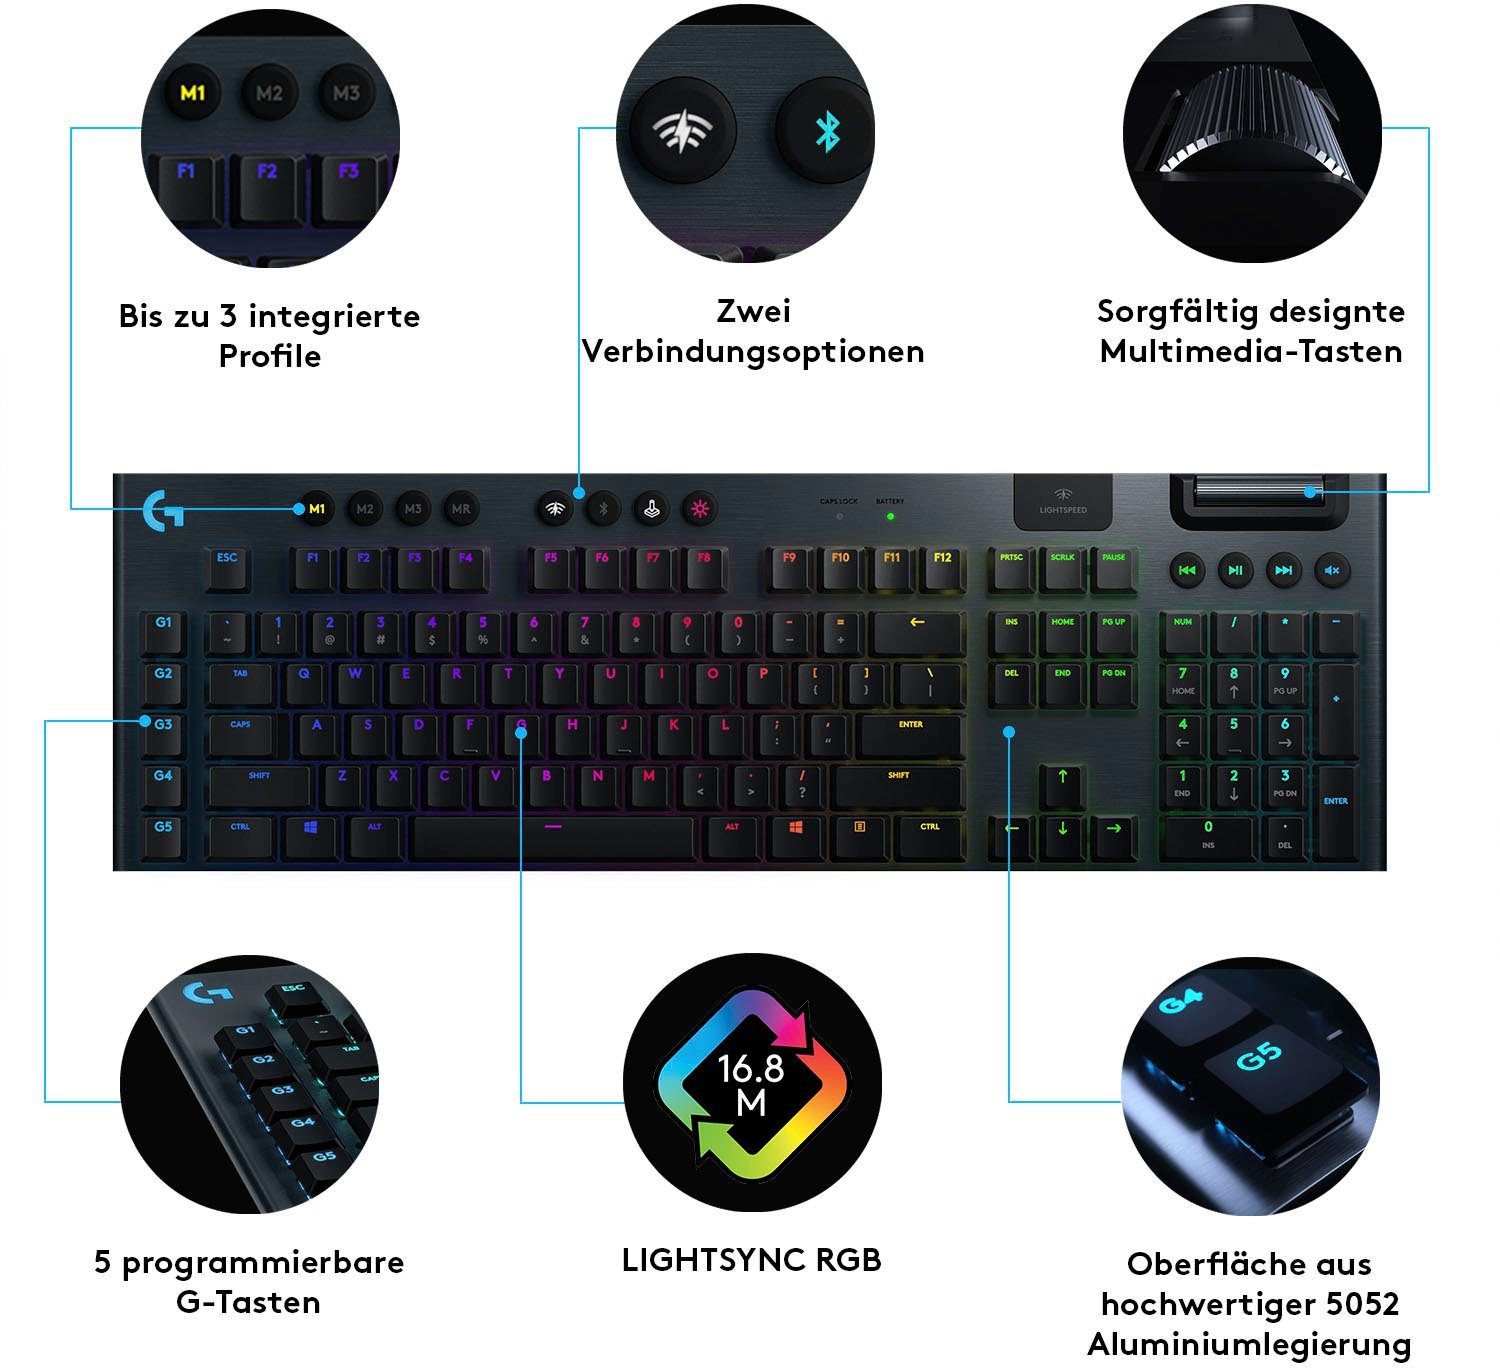 Gaming-Tastatur LIGHTSPEED G915 Logitech G tactile